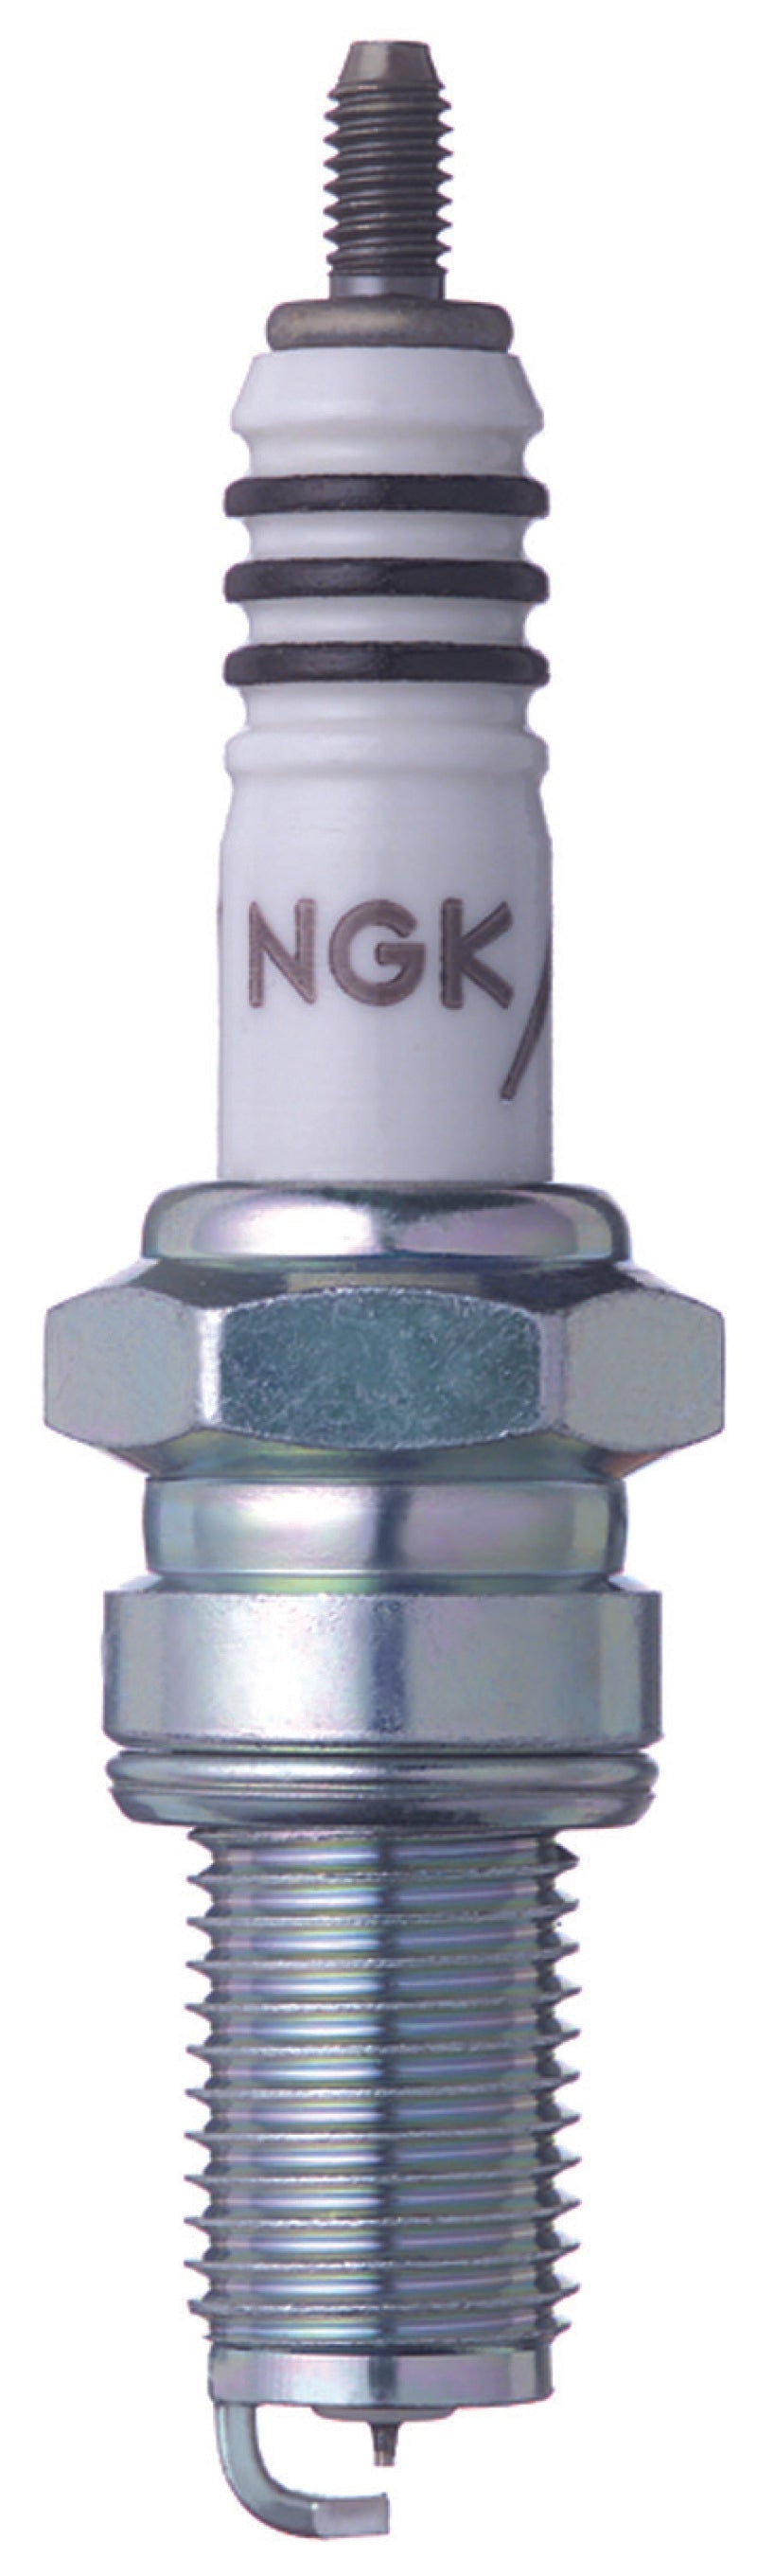 NGK Iridium IX Spark Plug Box of 4 (DR7EIX) -  Shop now at Performance Car Parts